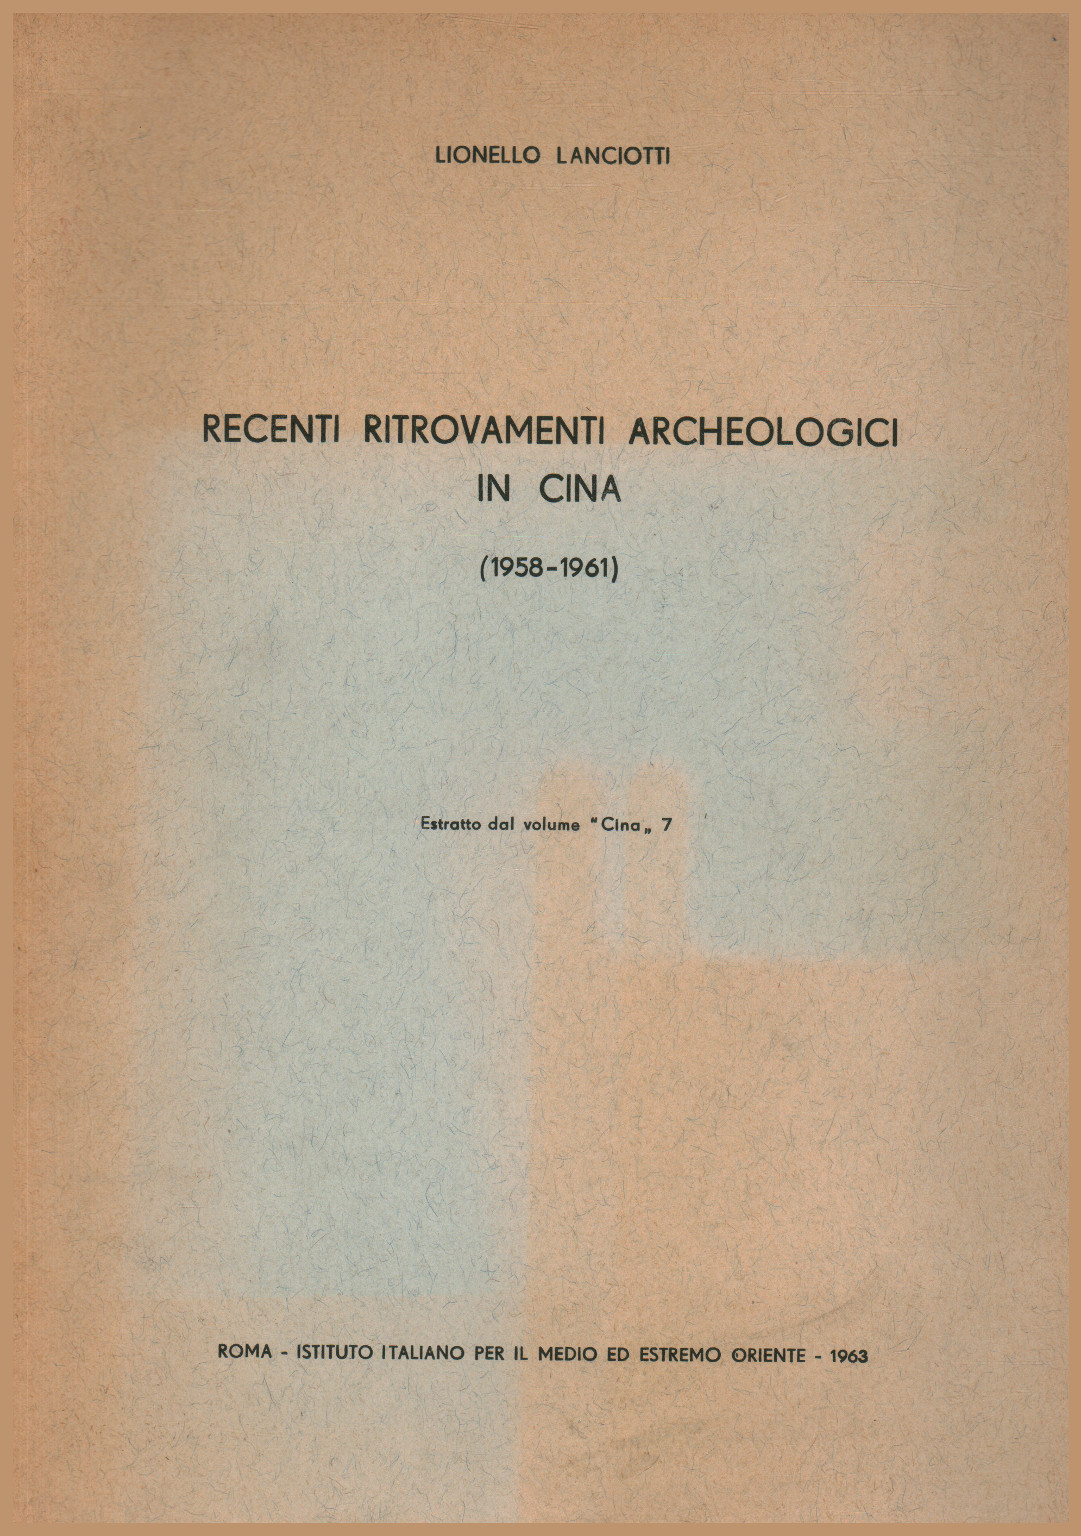 Neuere archäologische Funde in China (1958-19, s.a.)